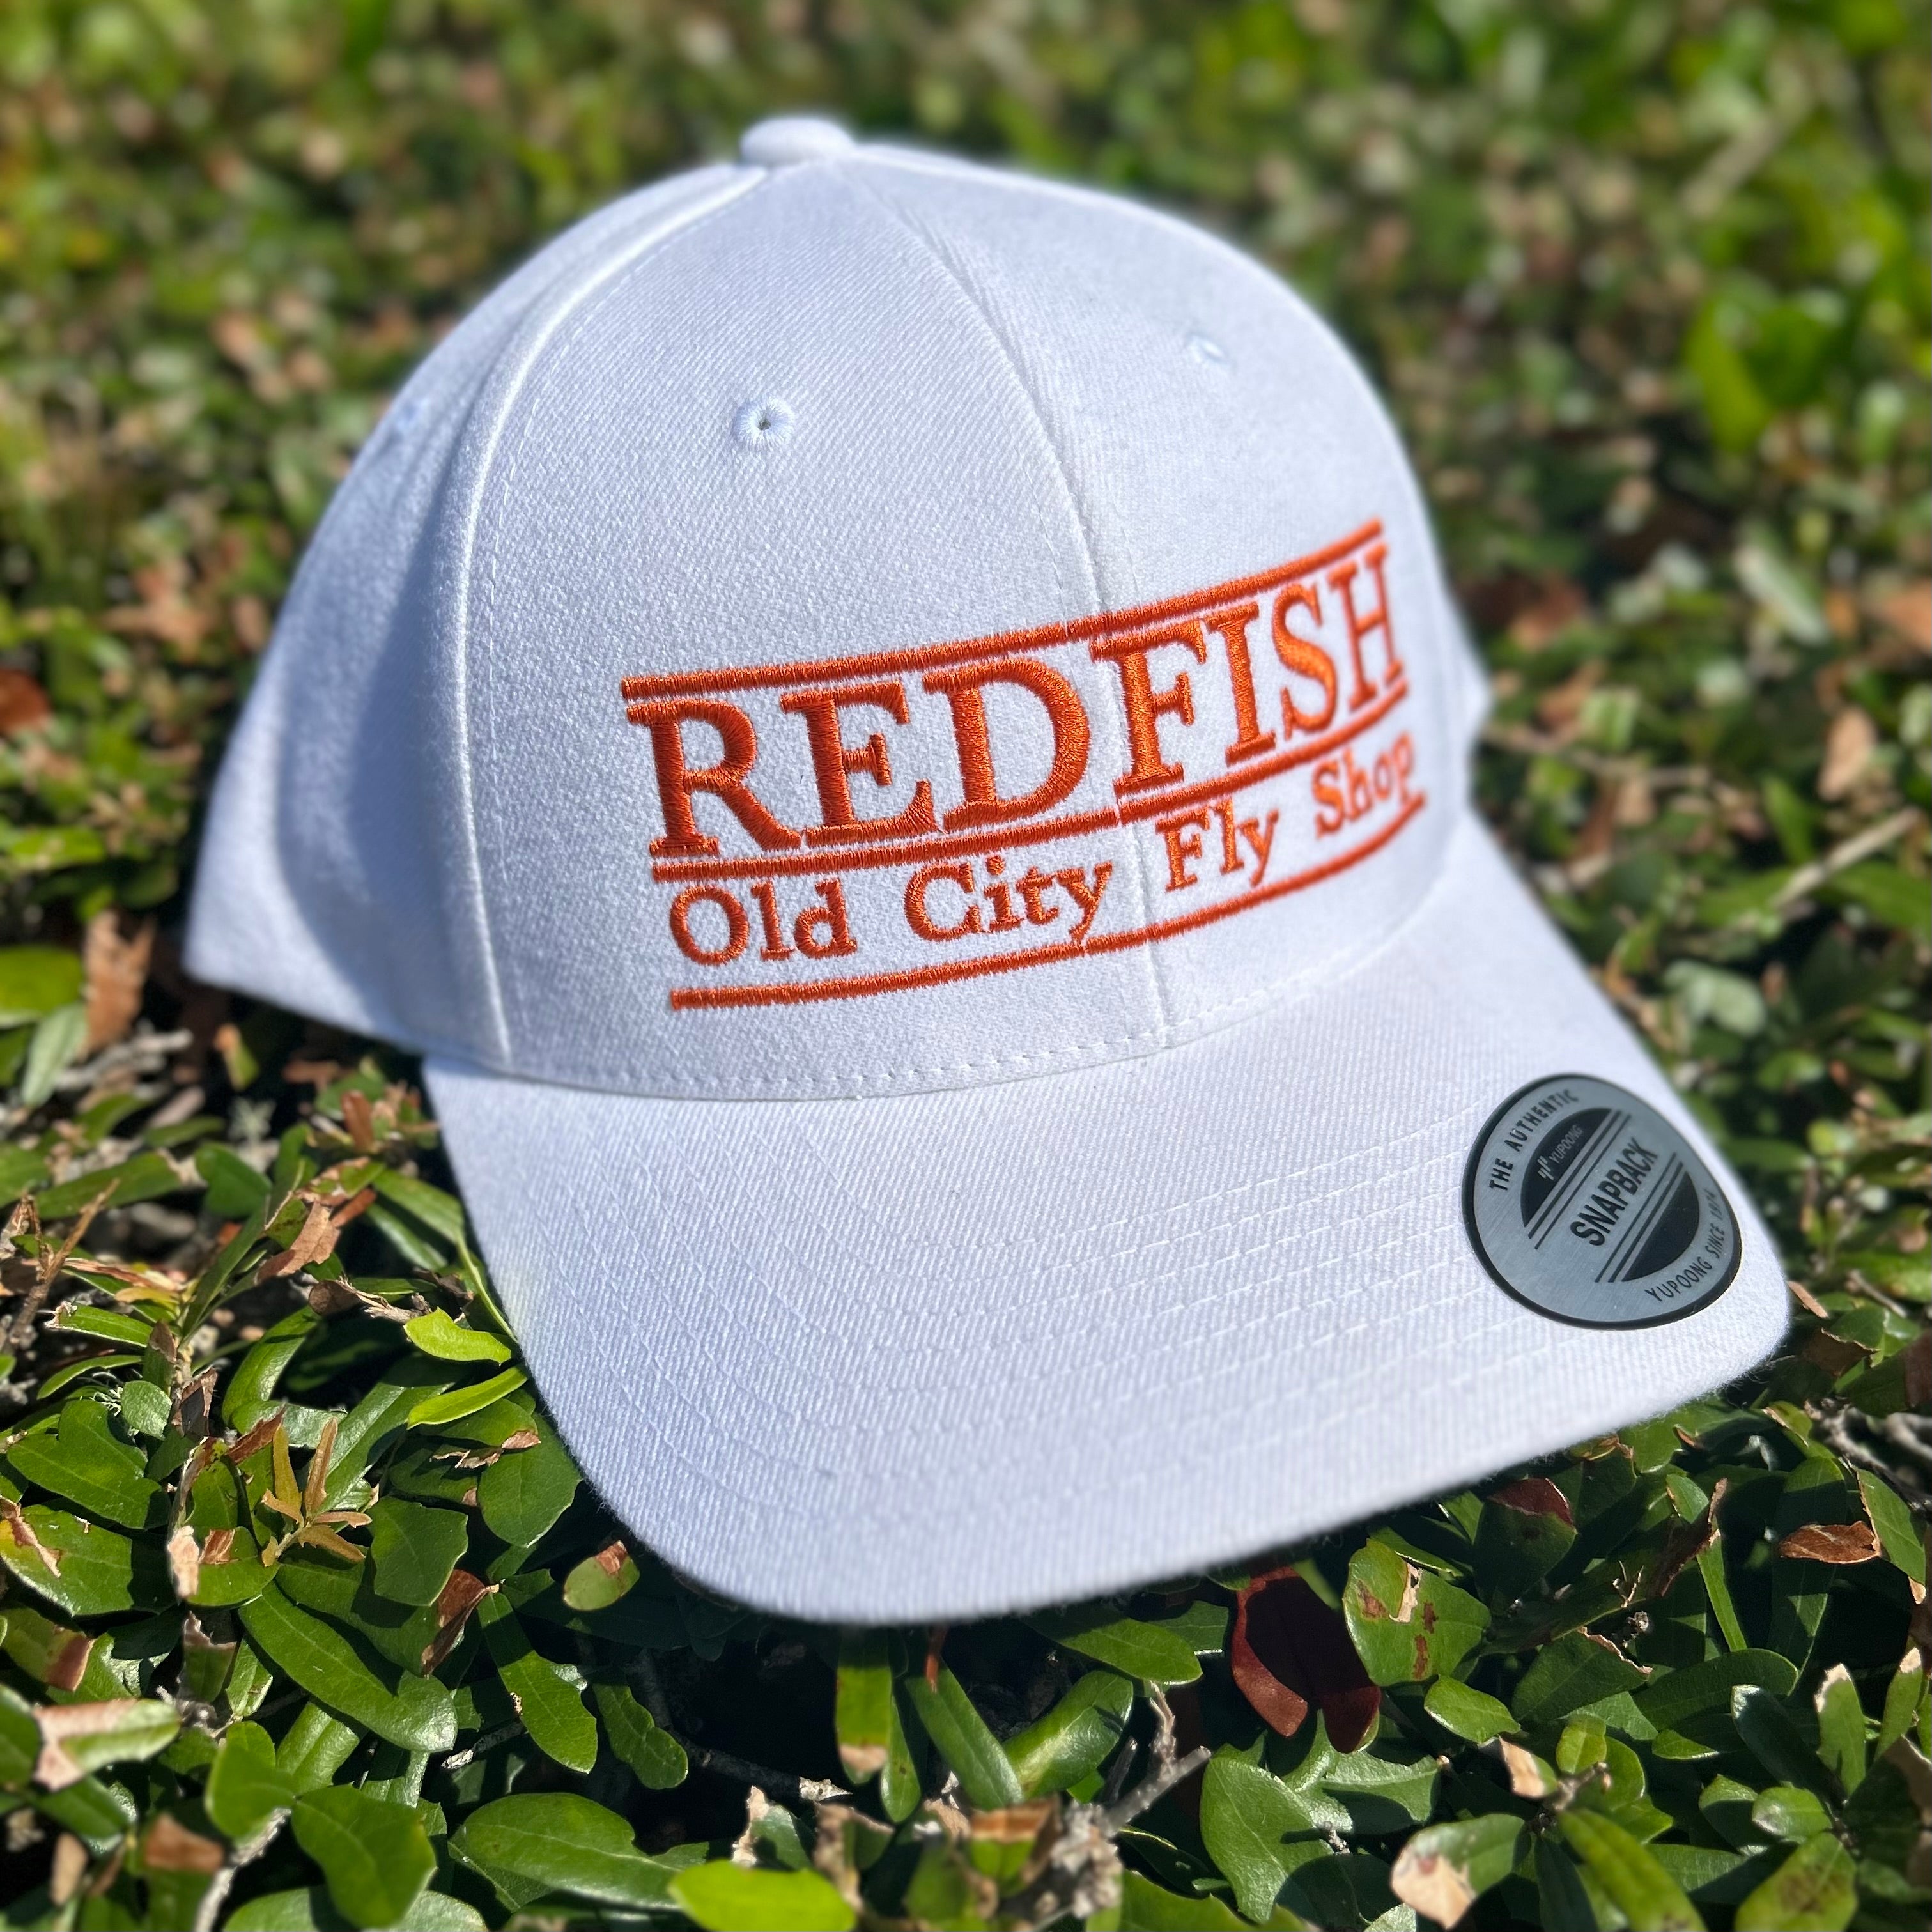 Classic Triple Bar Redfish Hats